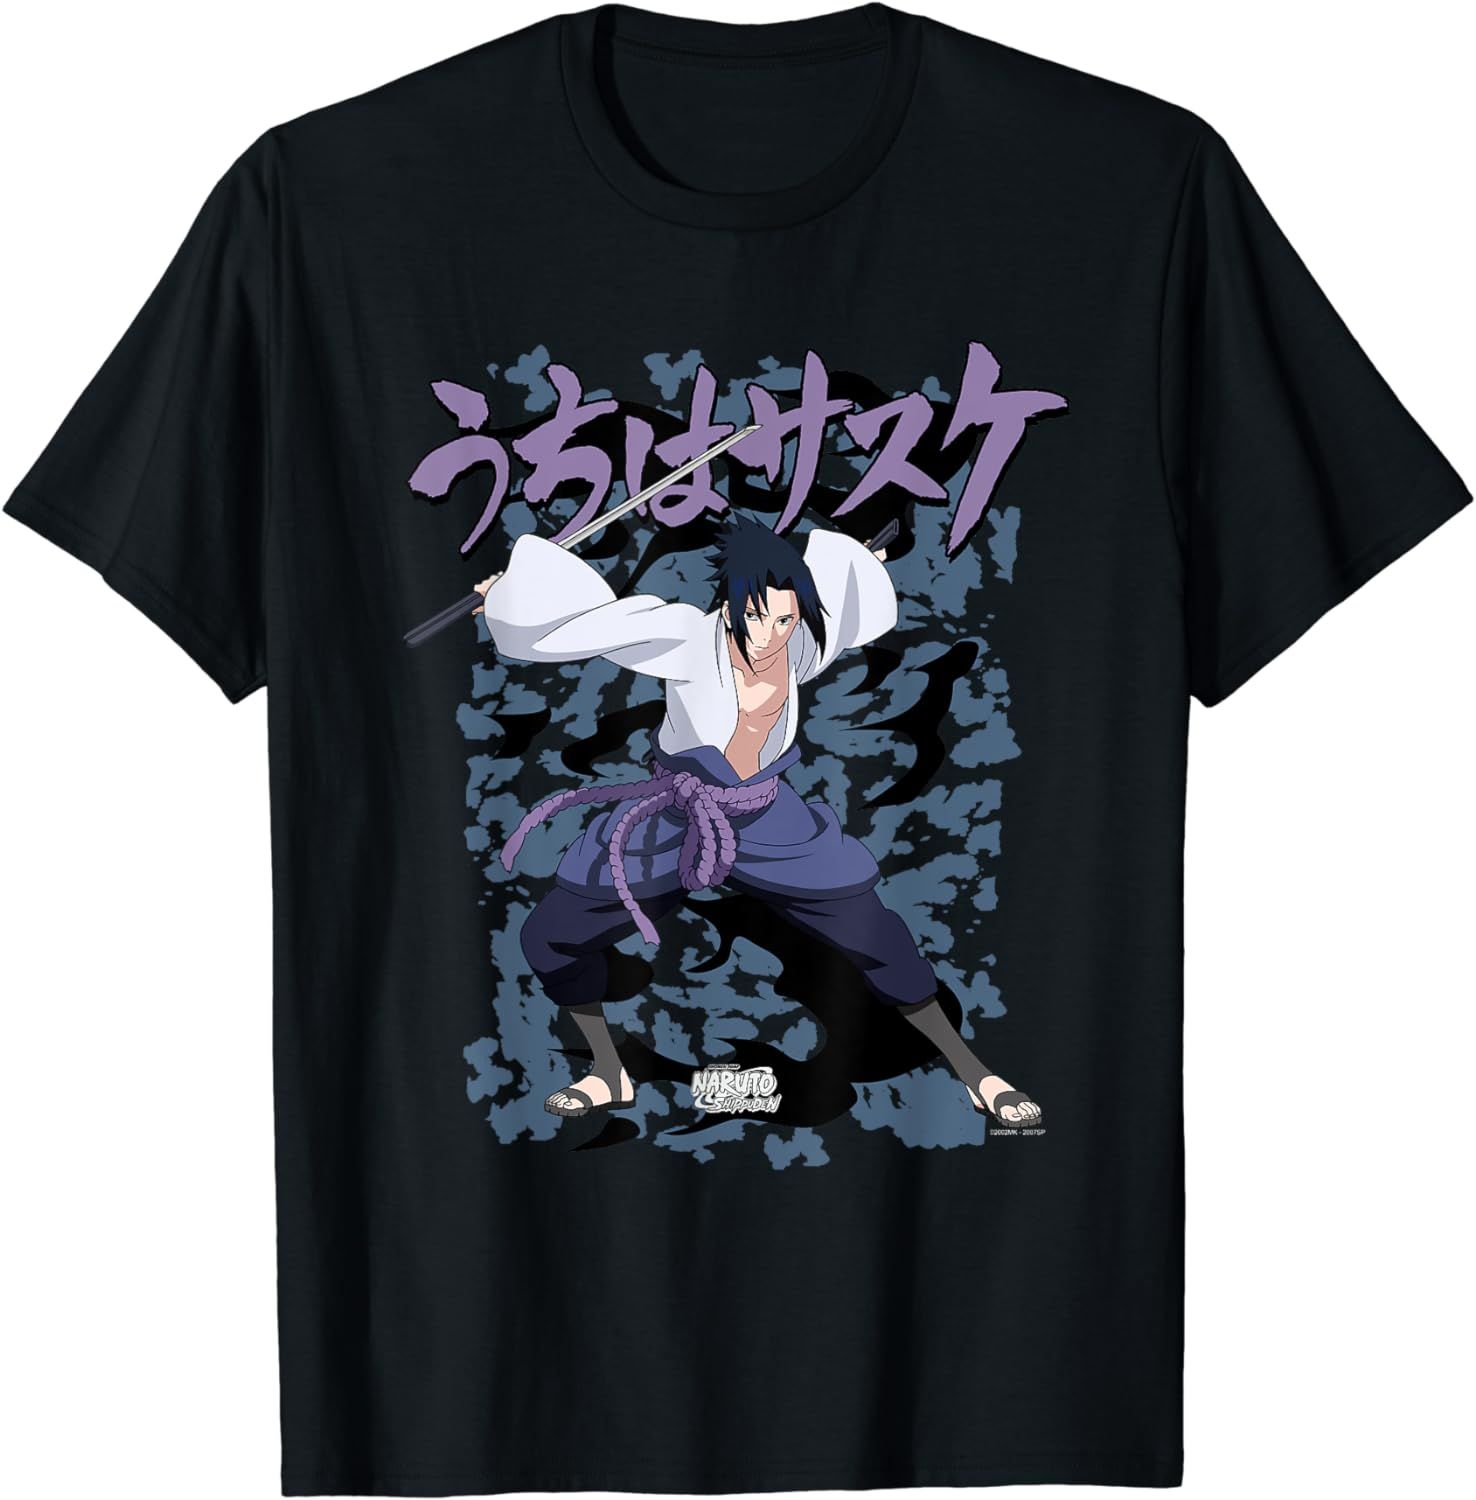 Anyway support. Саске в майке. Футболка Саске. Sasuke футболка. Футболка Наруто.